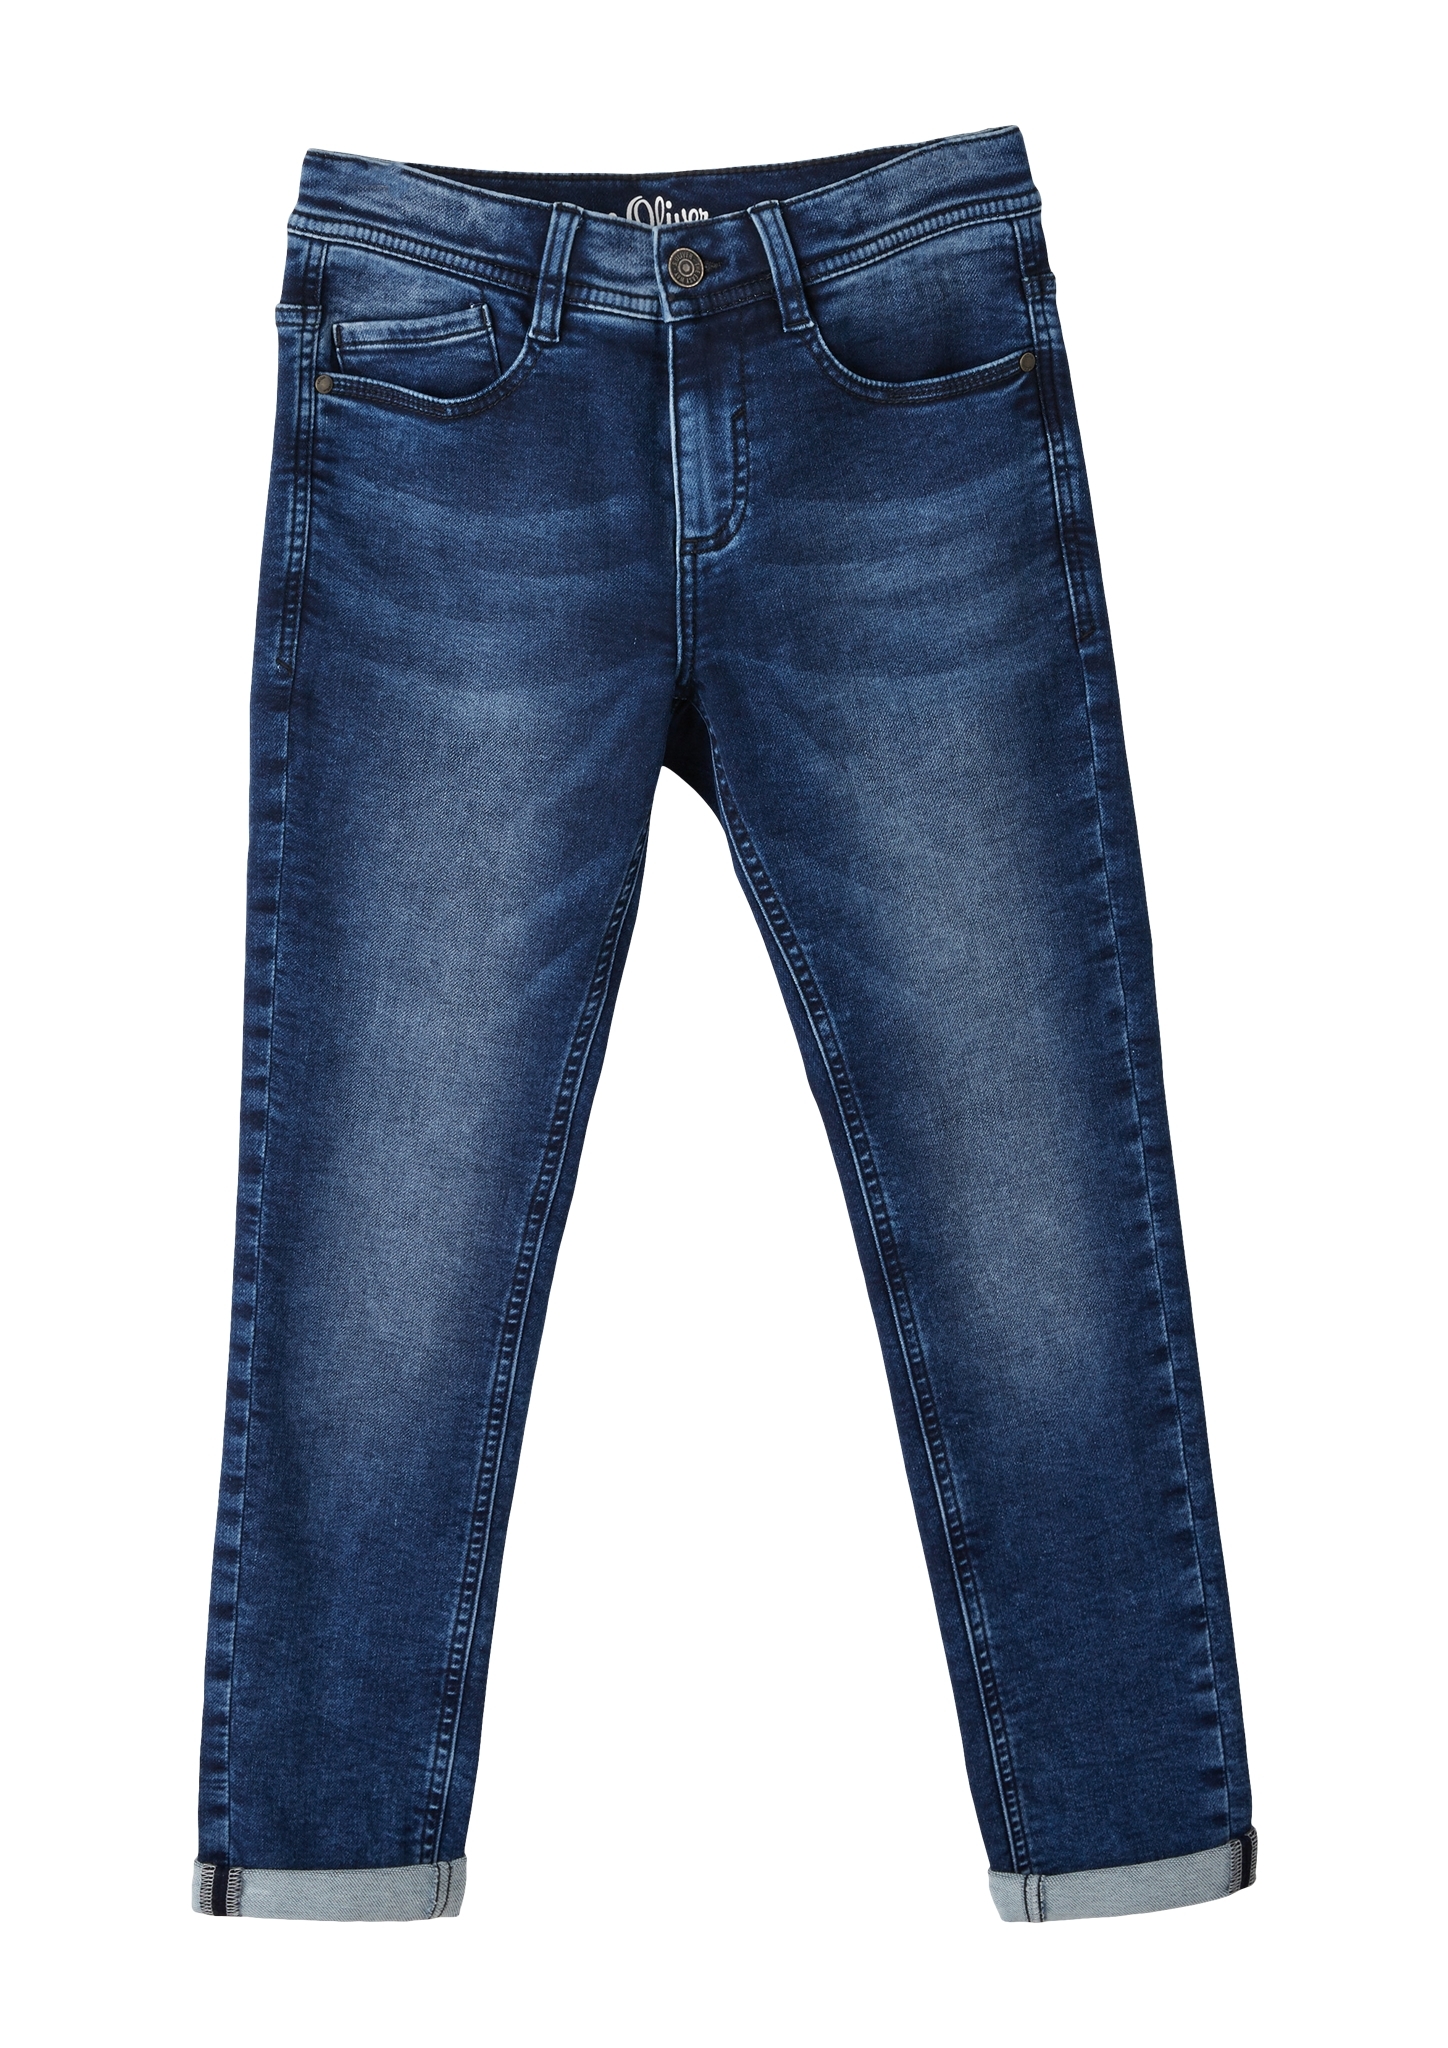 s.Oliver boys' jeans - Jesper Junior | FAOR Oy